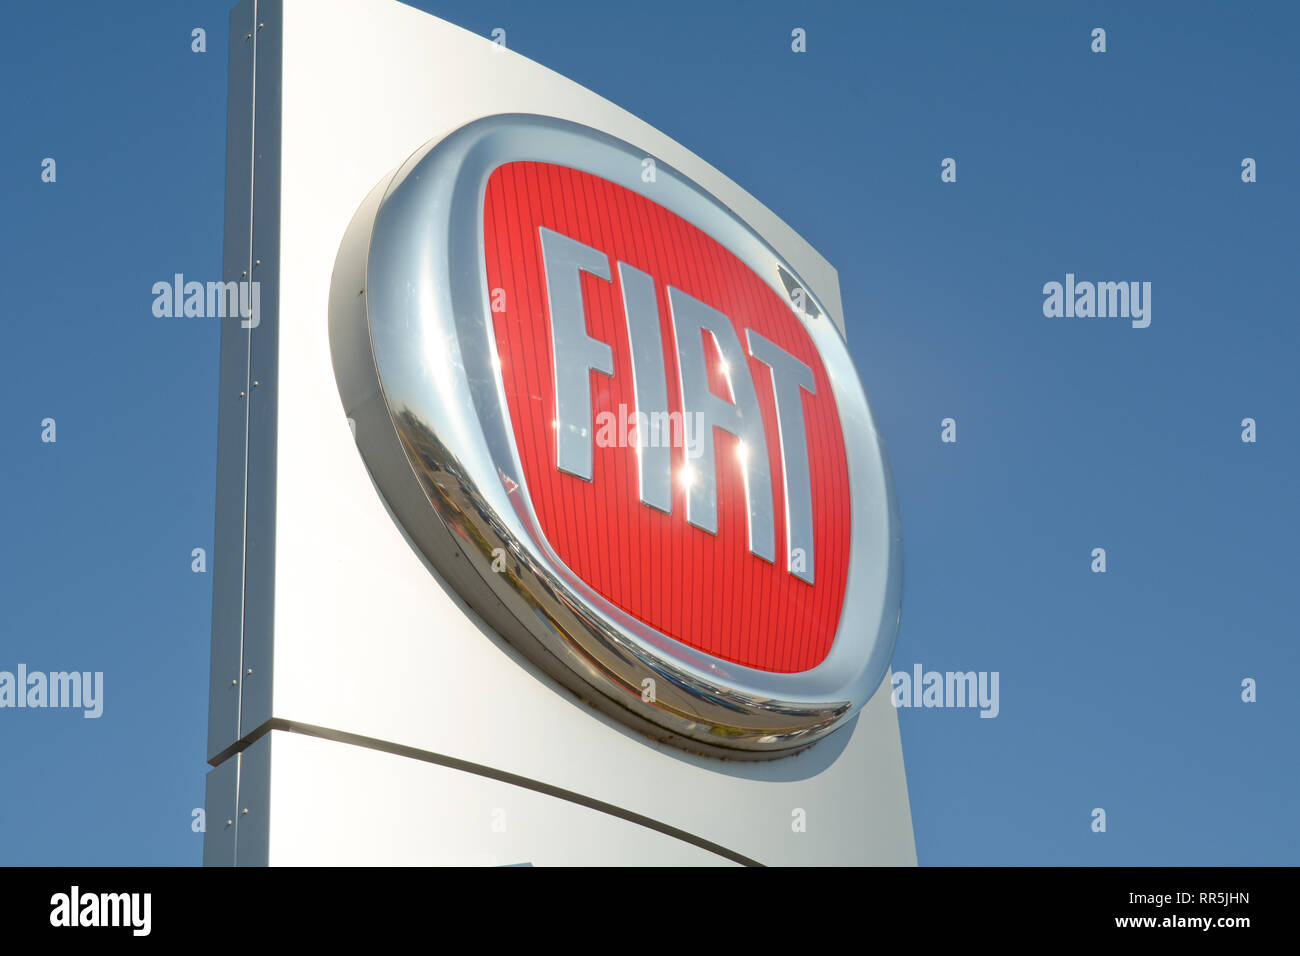 Fiat car logo sign Stock Photo